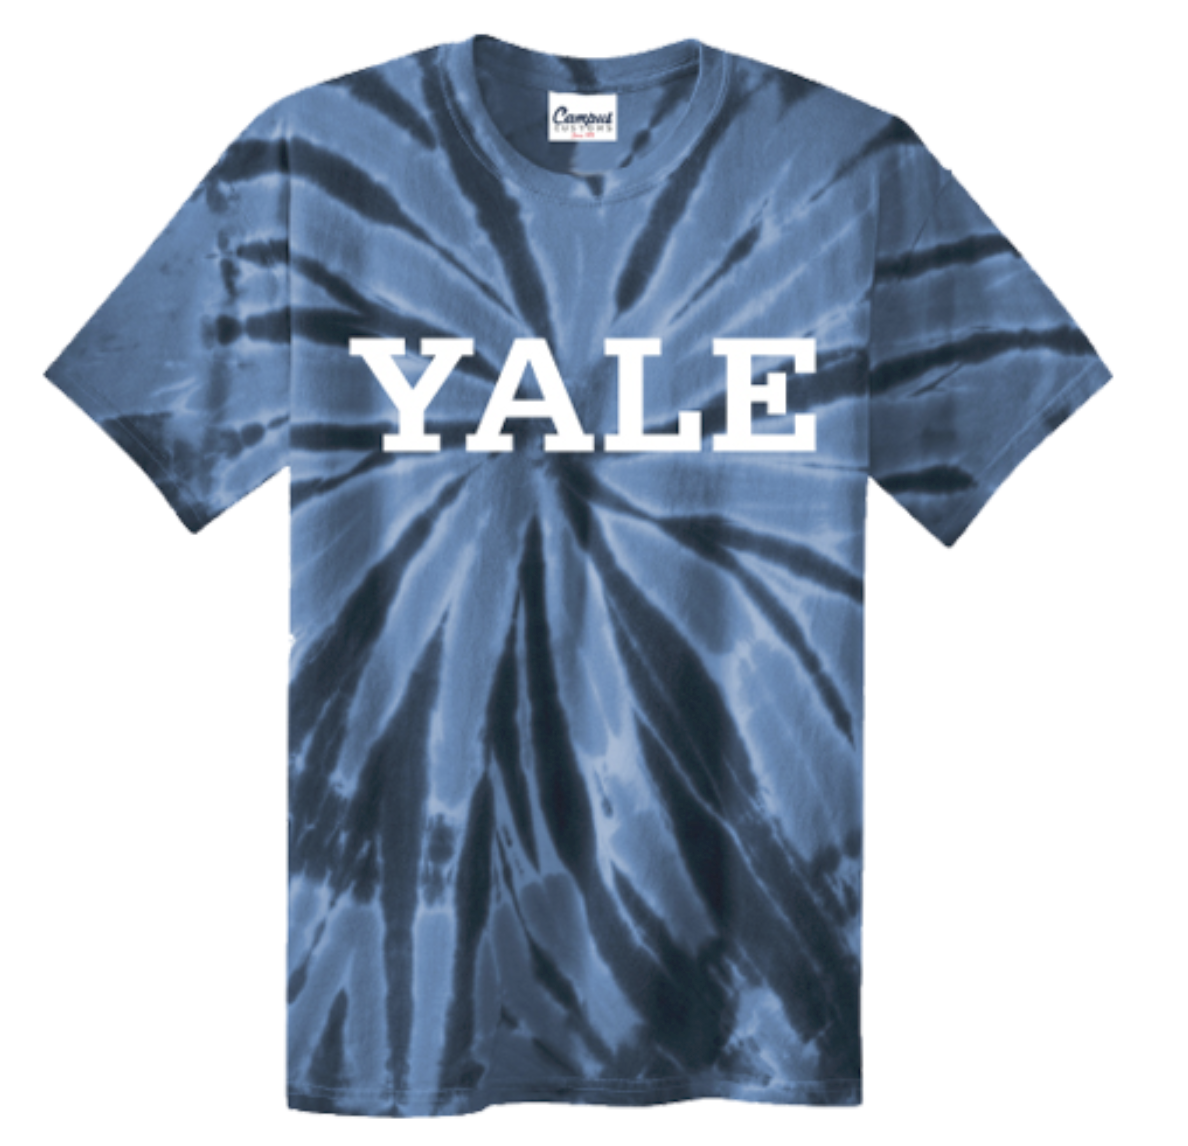 Yale tie dye t-shirt